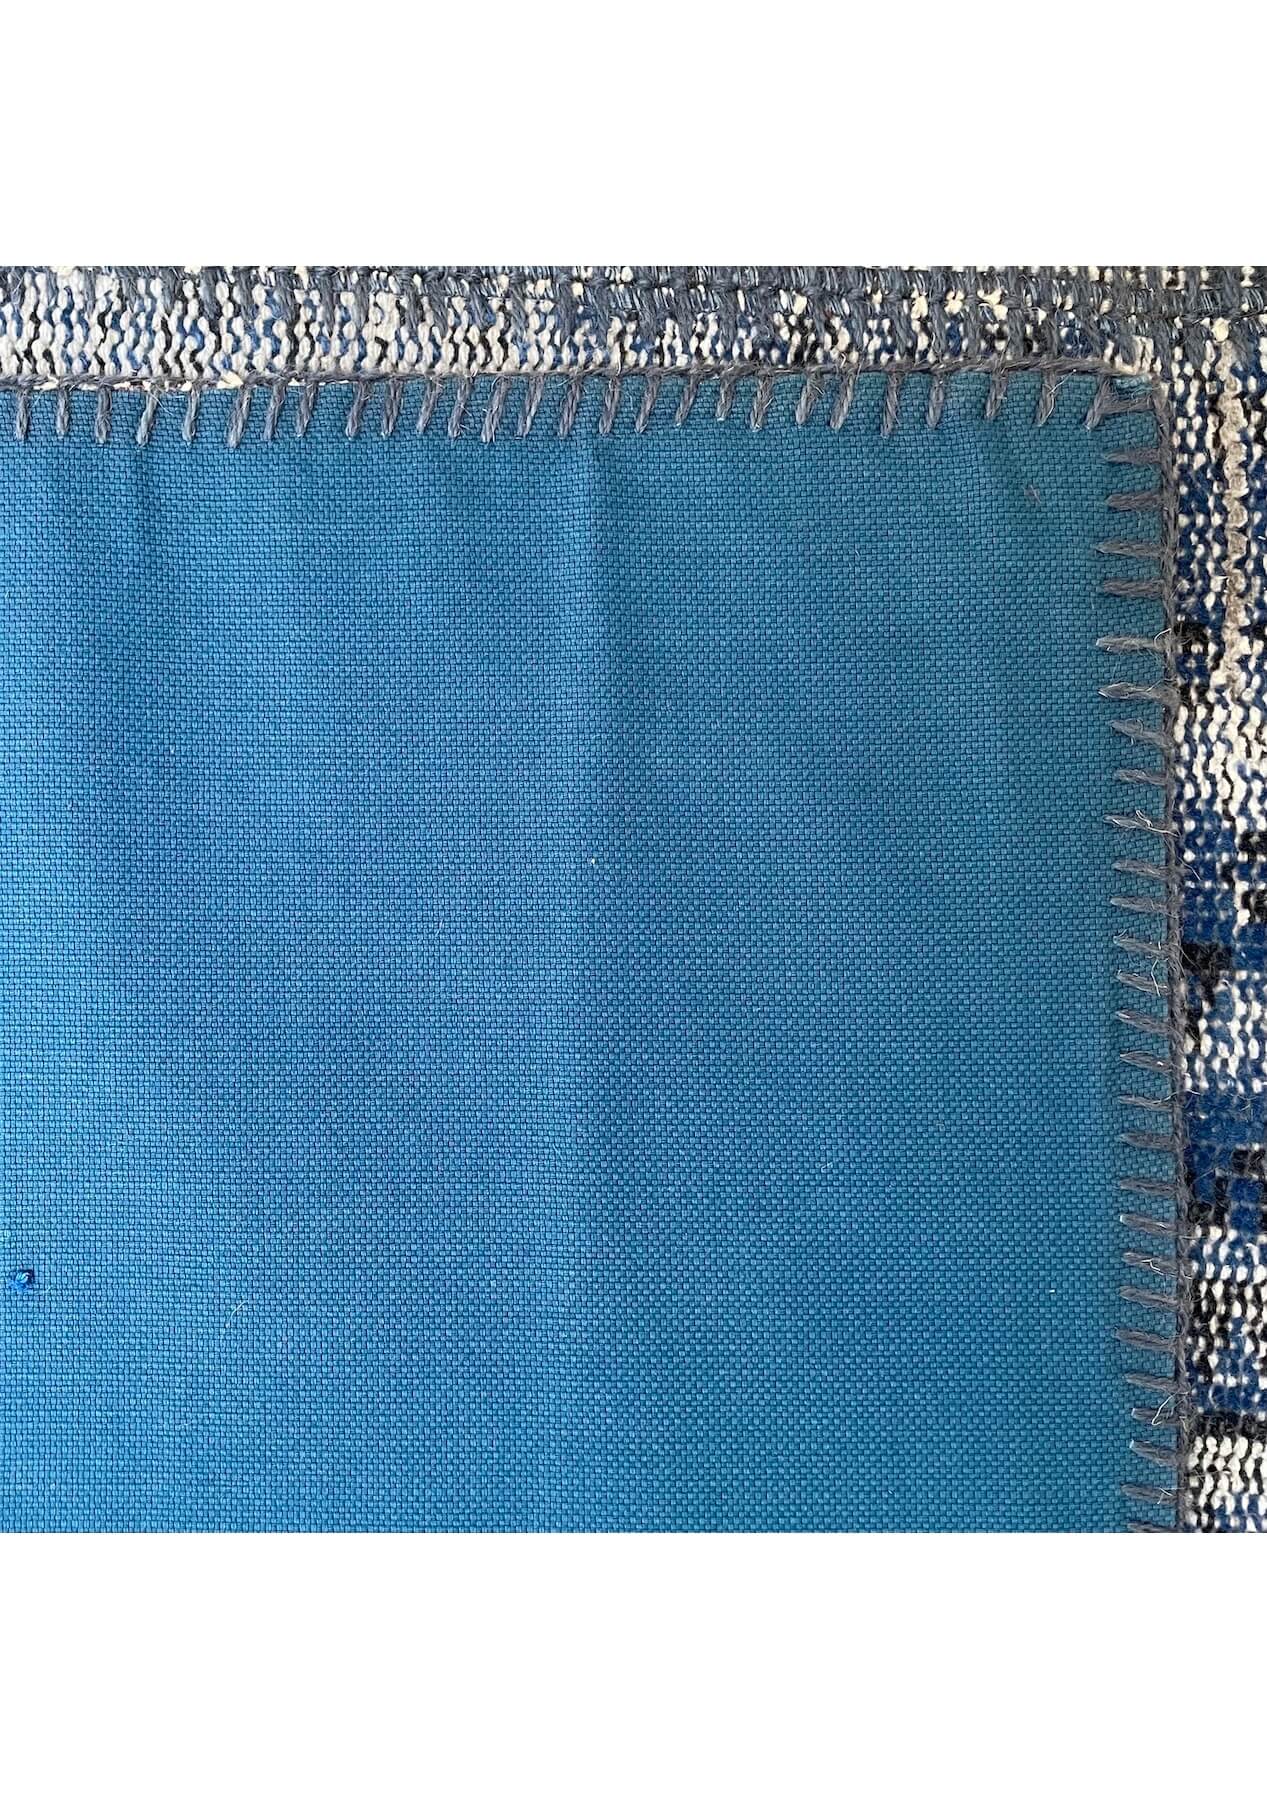 Wilma - Vintage Navy Blue Patchwork Rug - kudenrugs